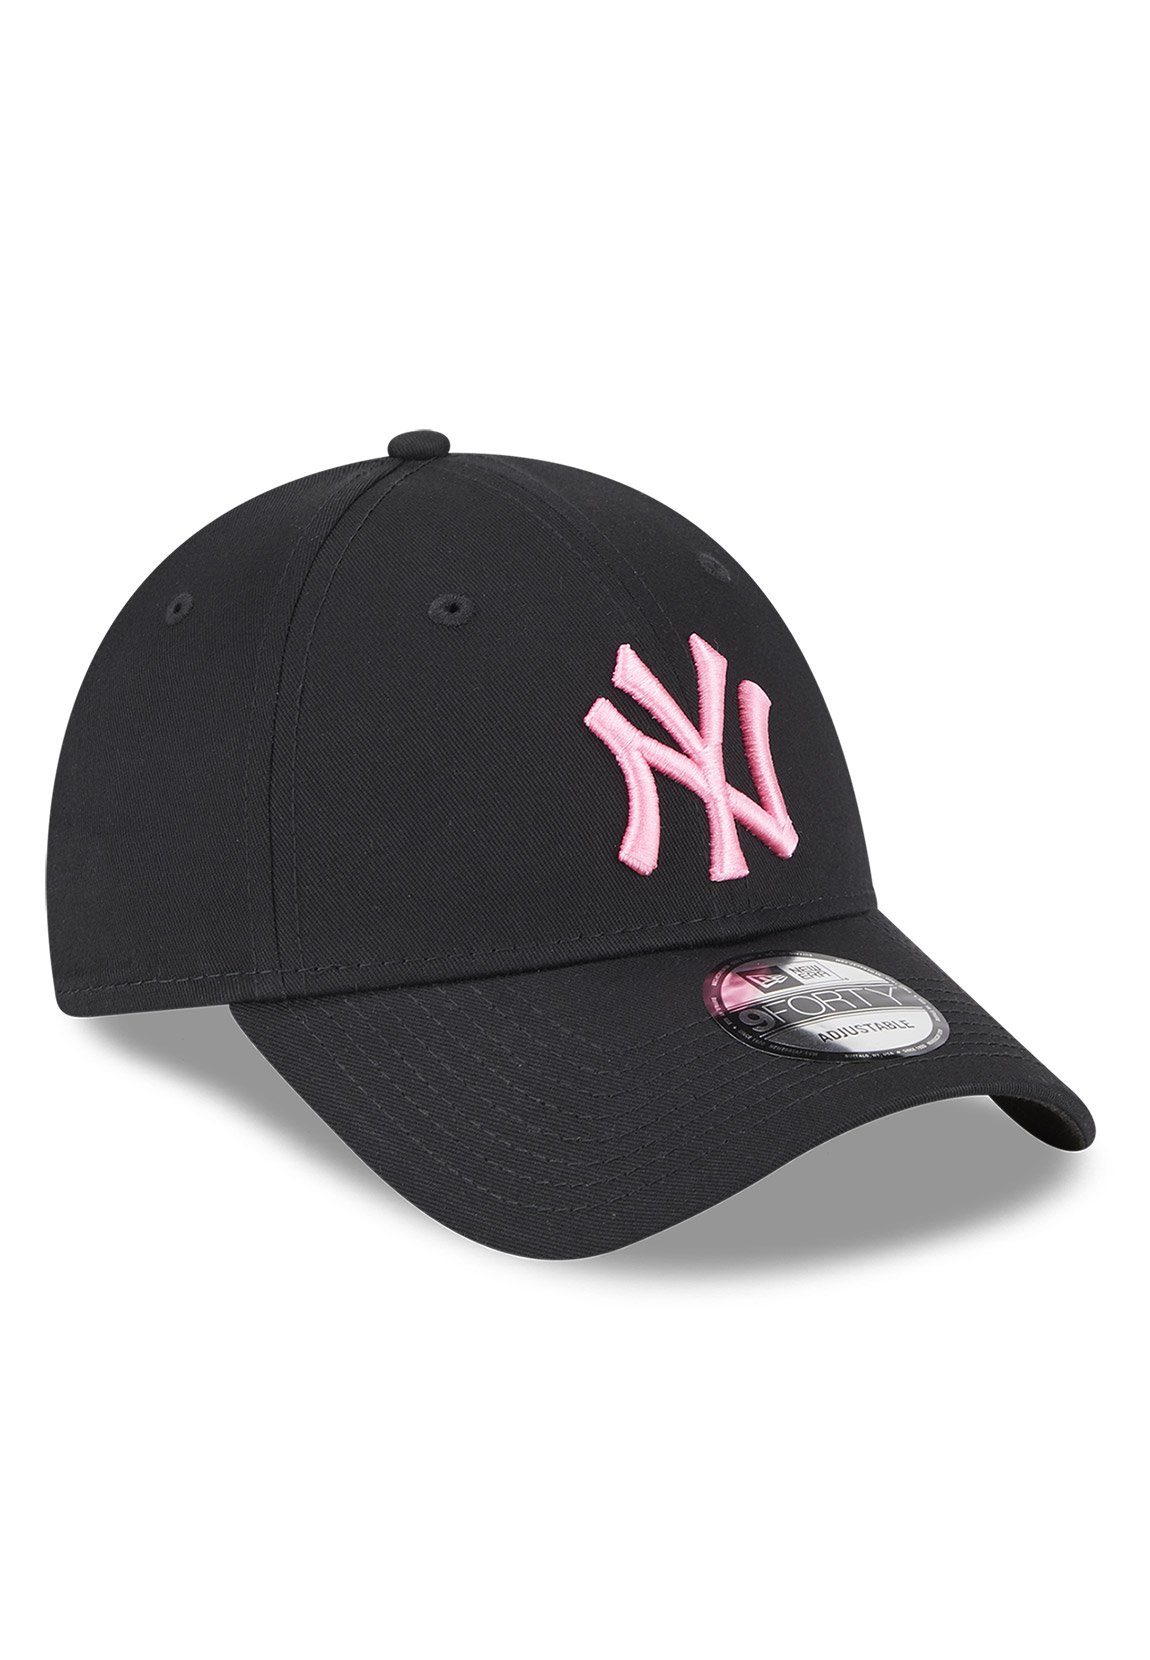 New Era Baseball Cap New Era Cap Pink YANKEES Schwarz 9Forty Adjustable schwarz-pink Neon NY